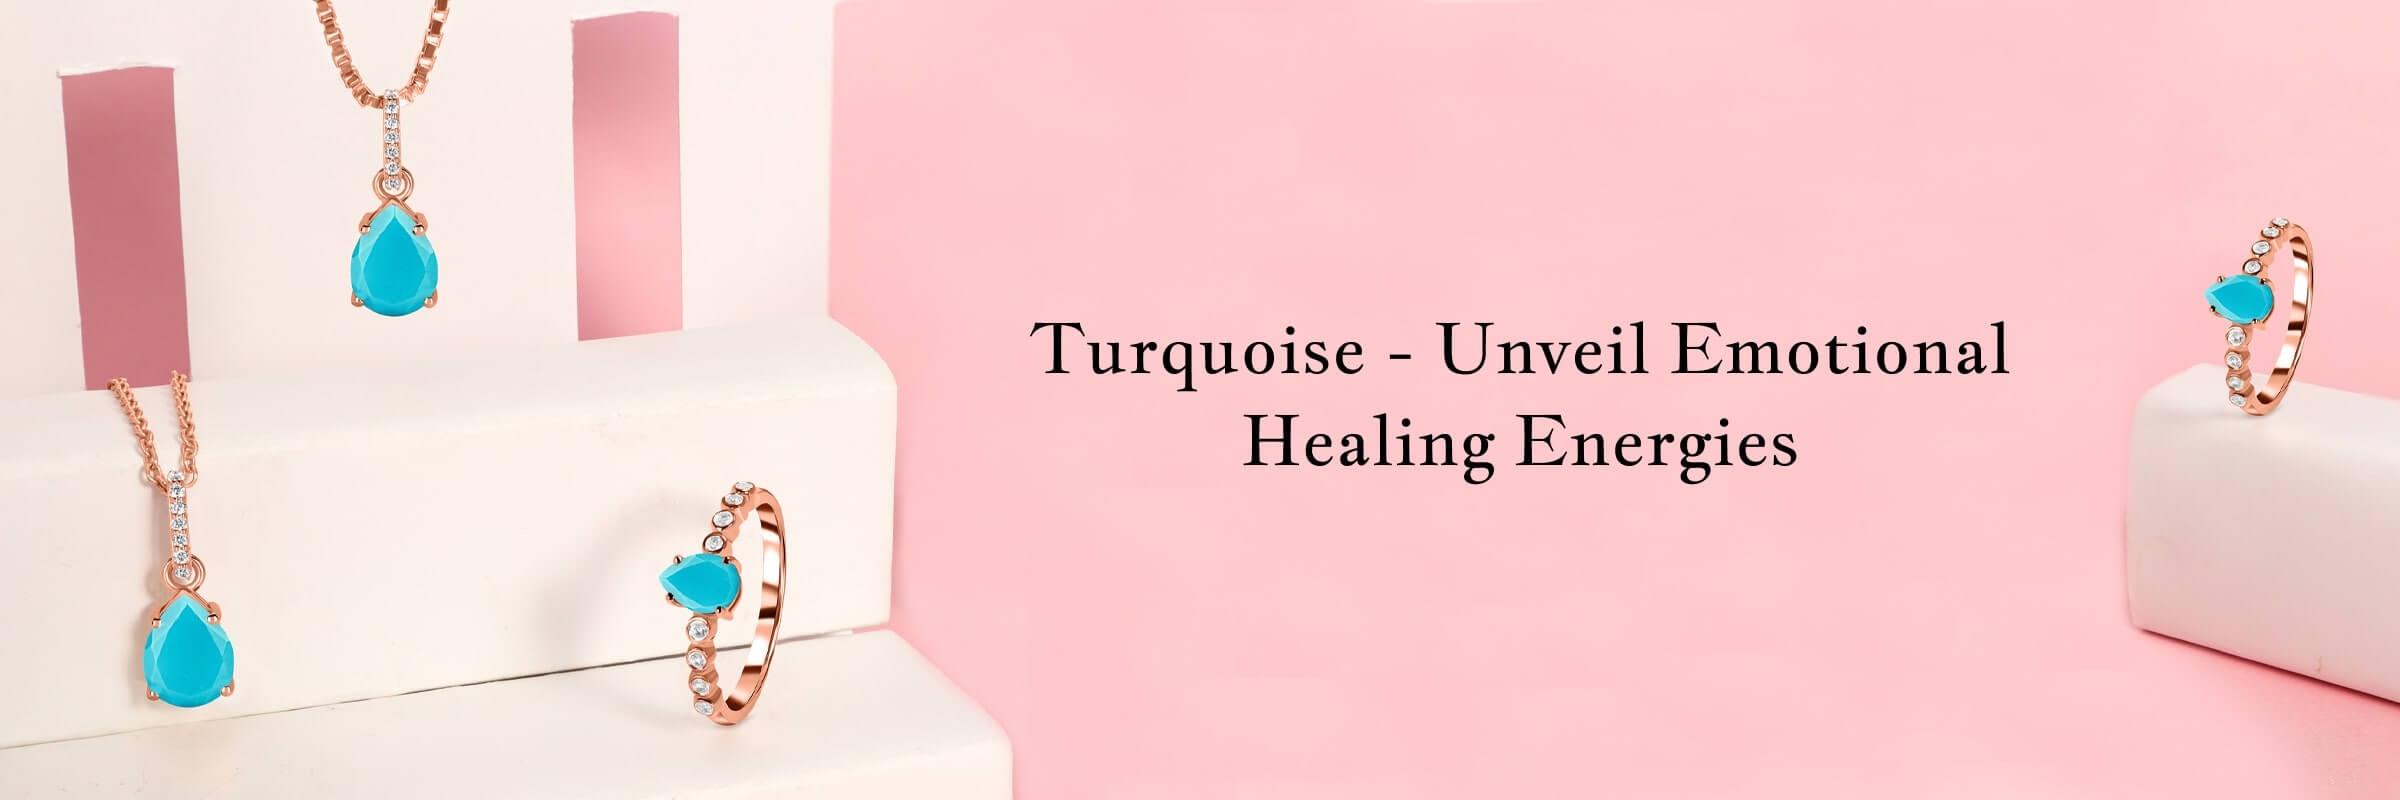 Turquoise Emotional Healing Properties